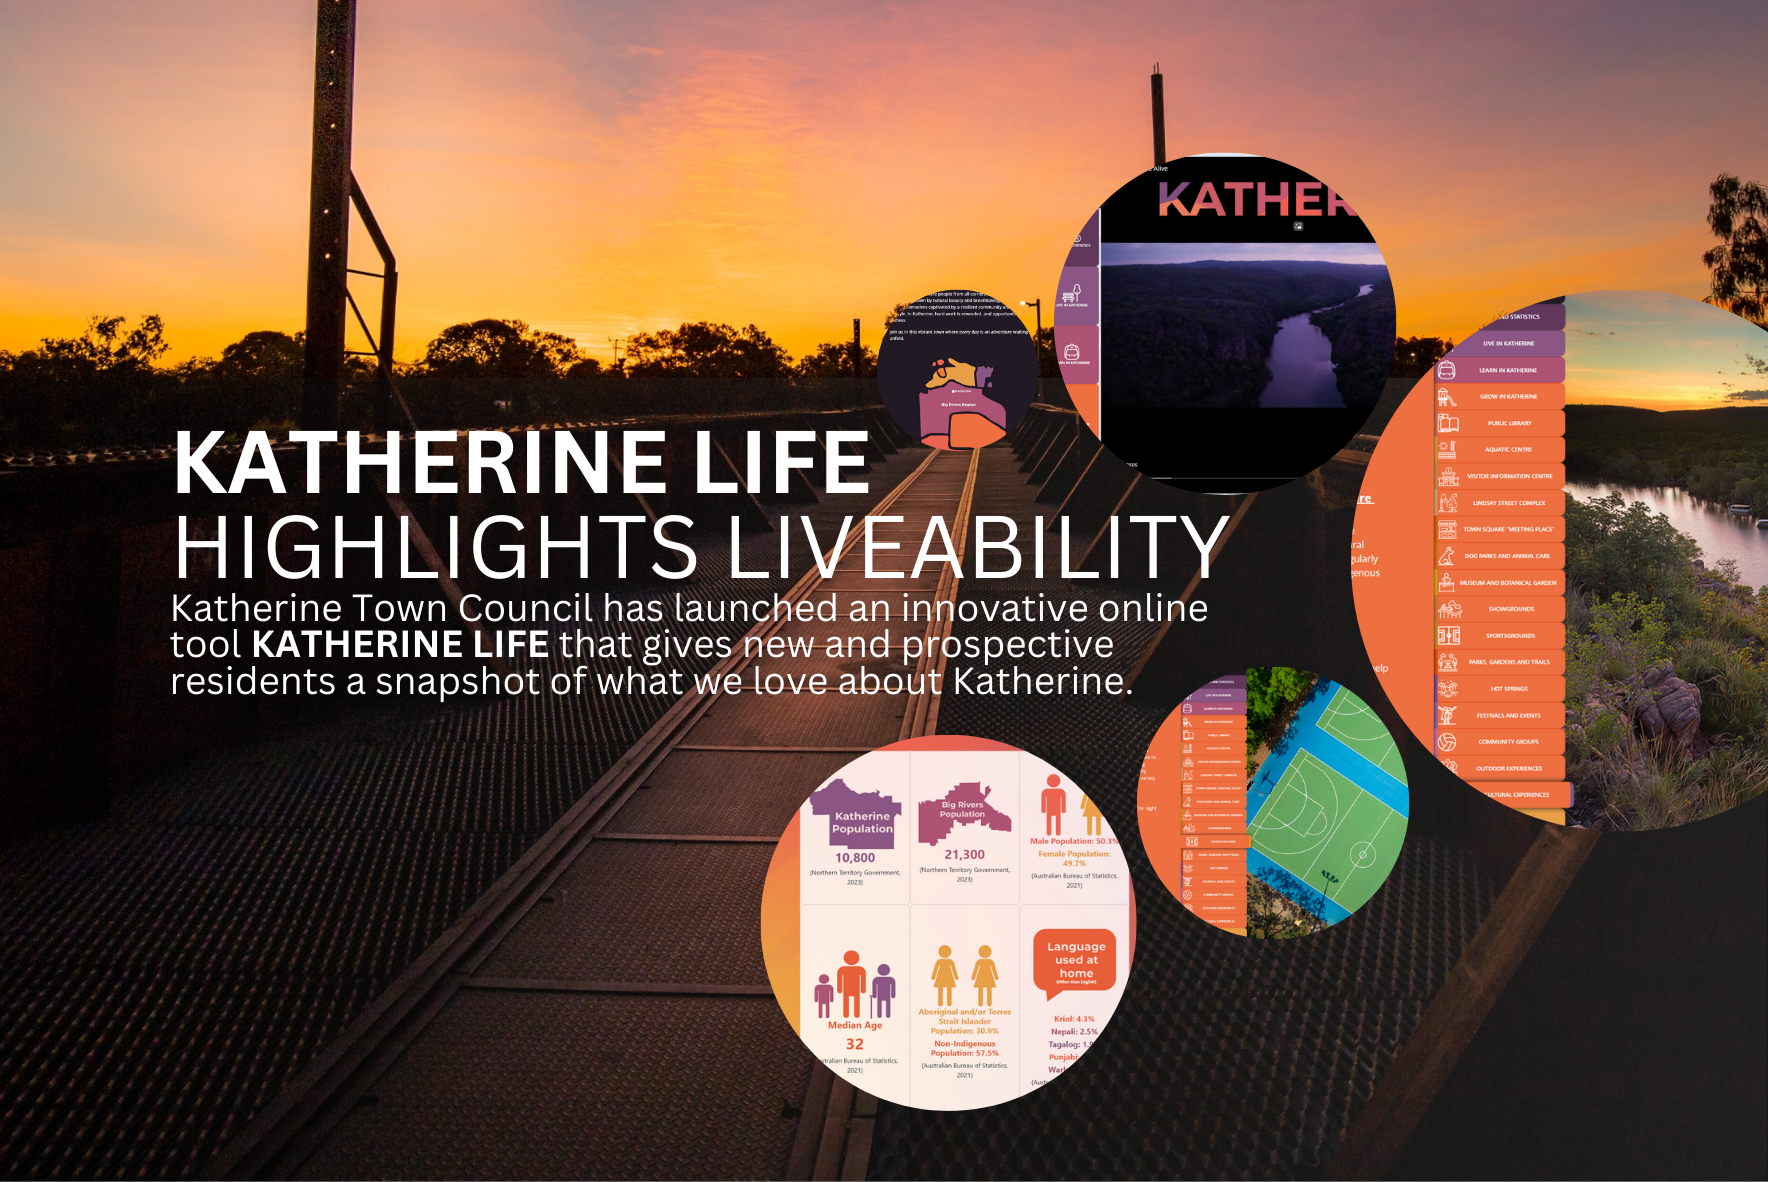 Media Release - Katherine Life Highlights Liveability